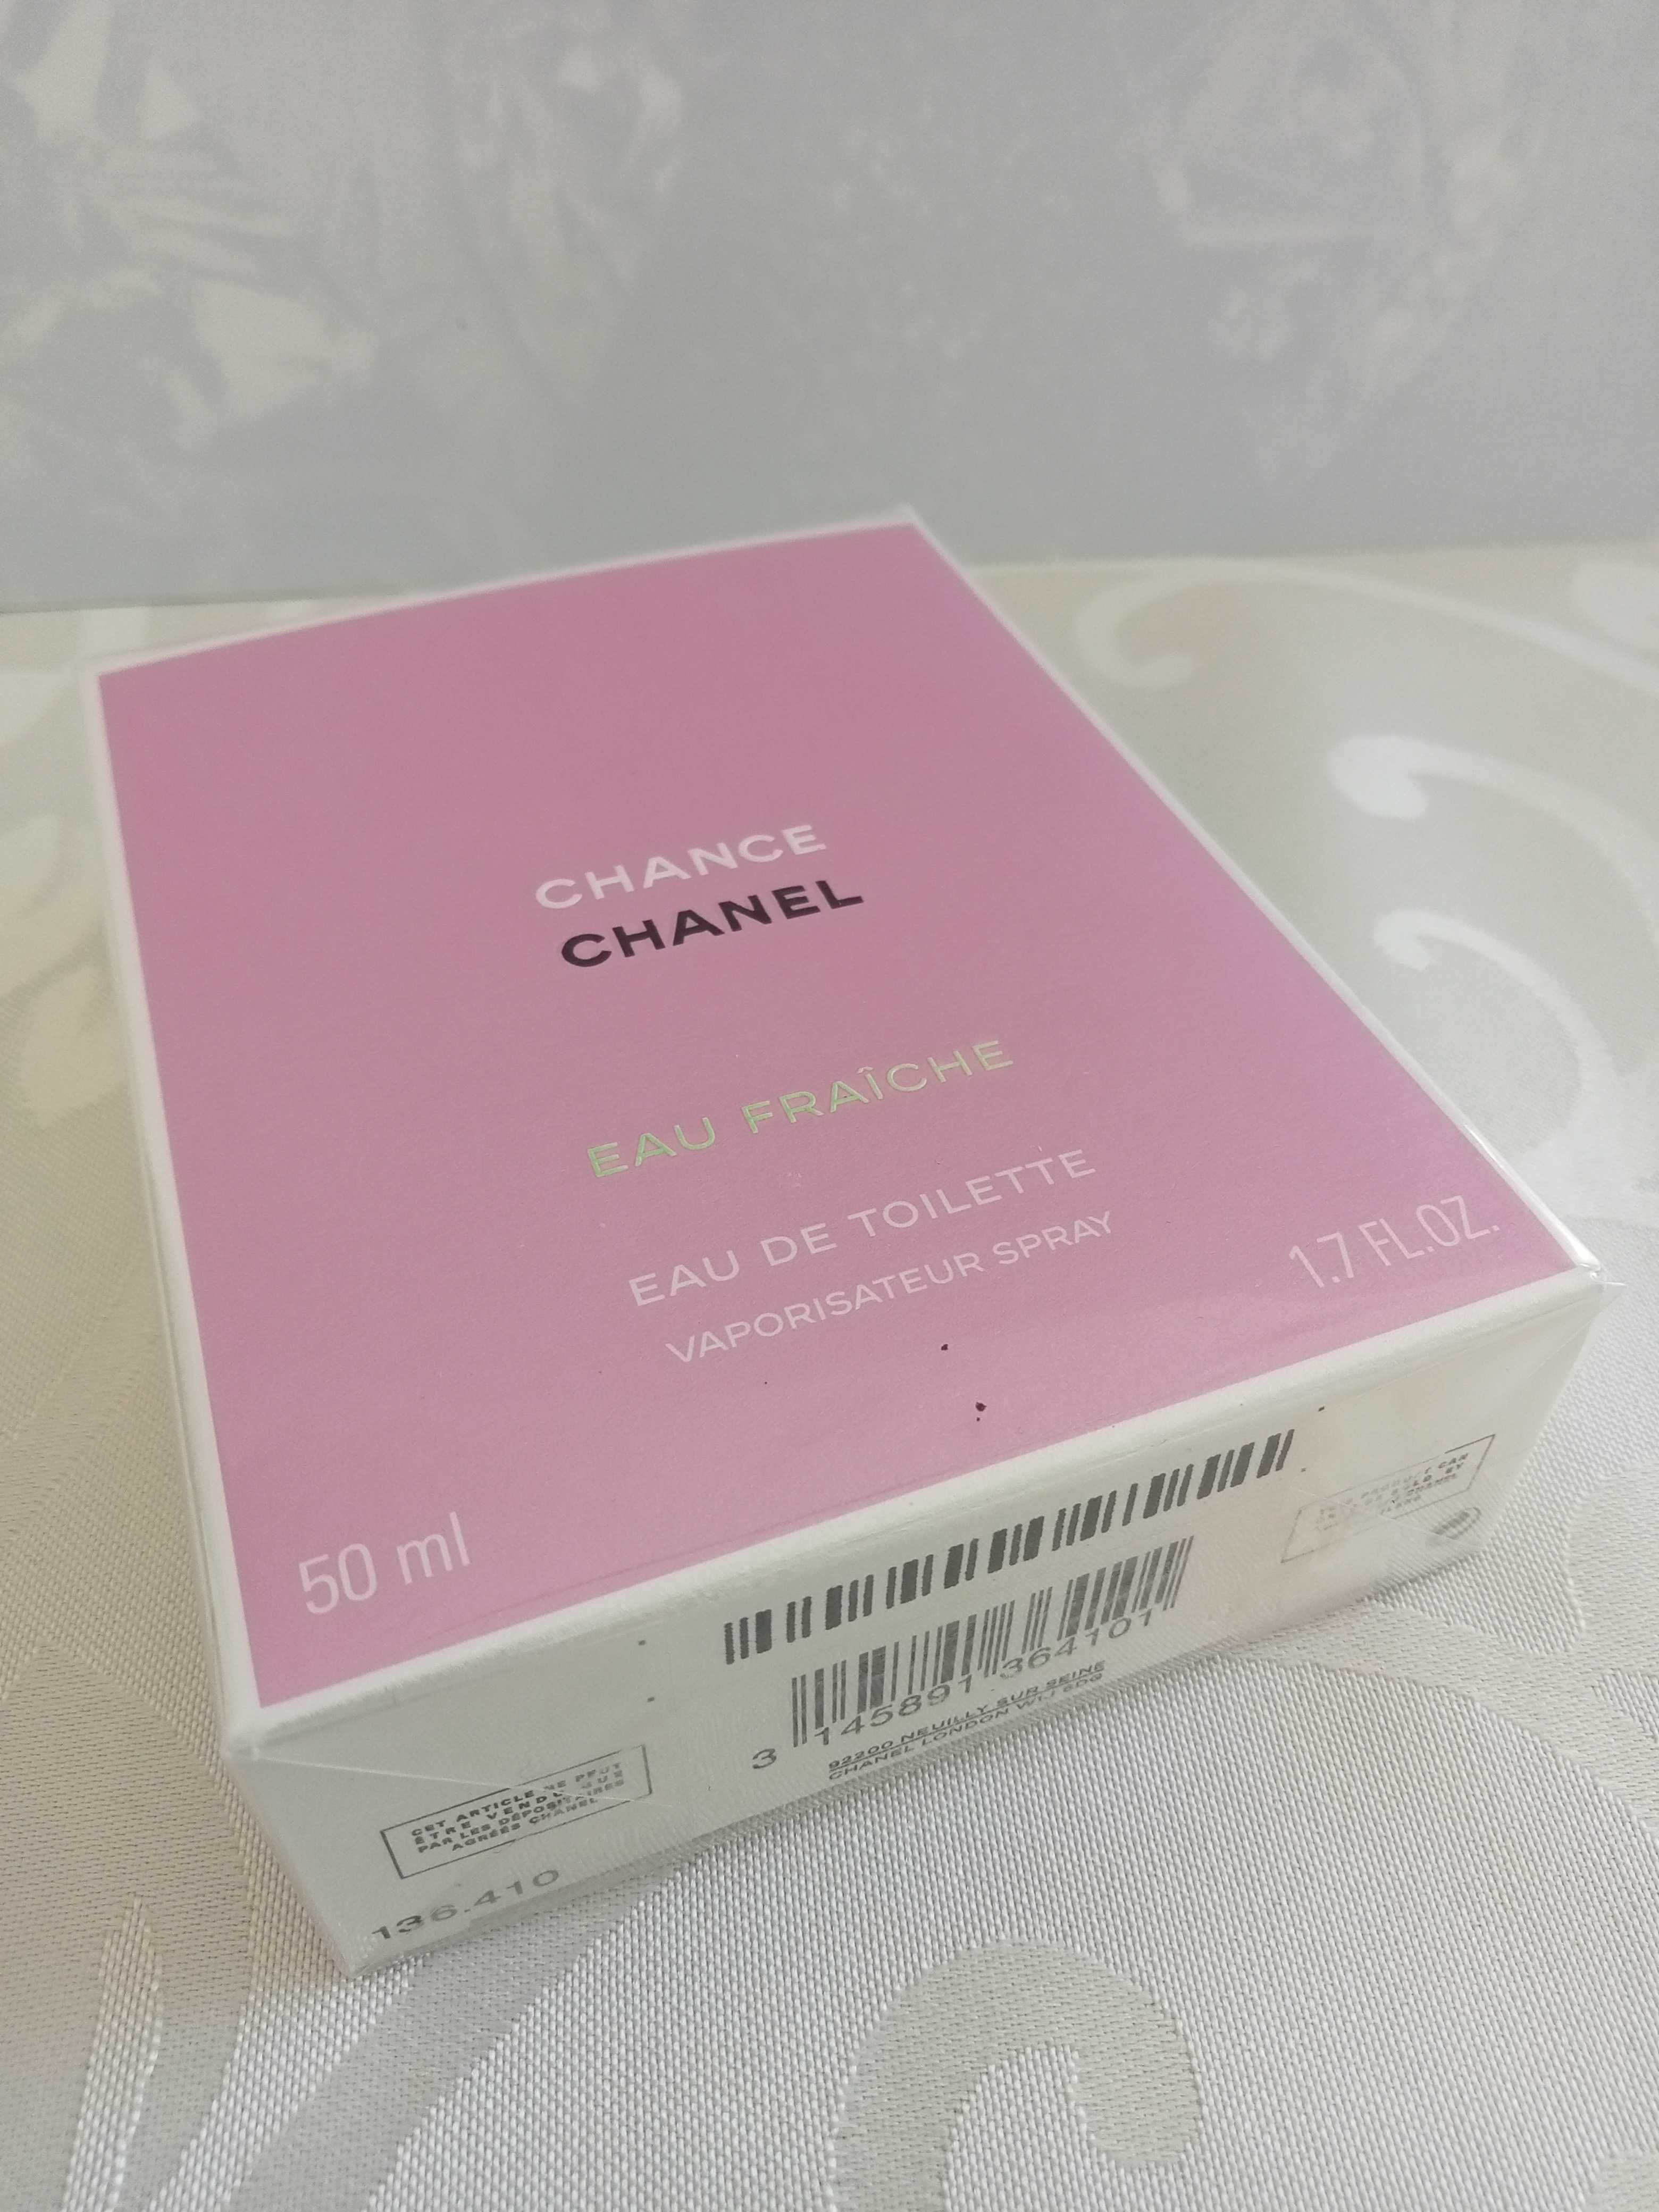 Chanel Chance Eau Fraiche woda toaletowa 50ml